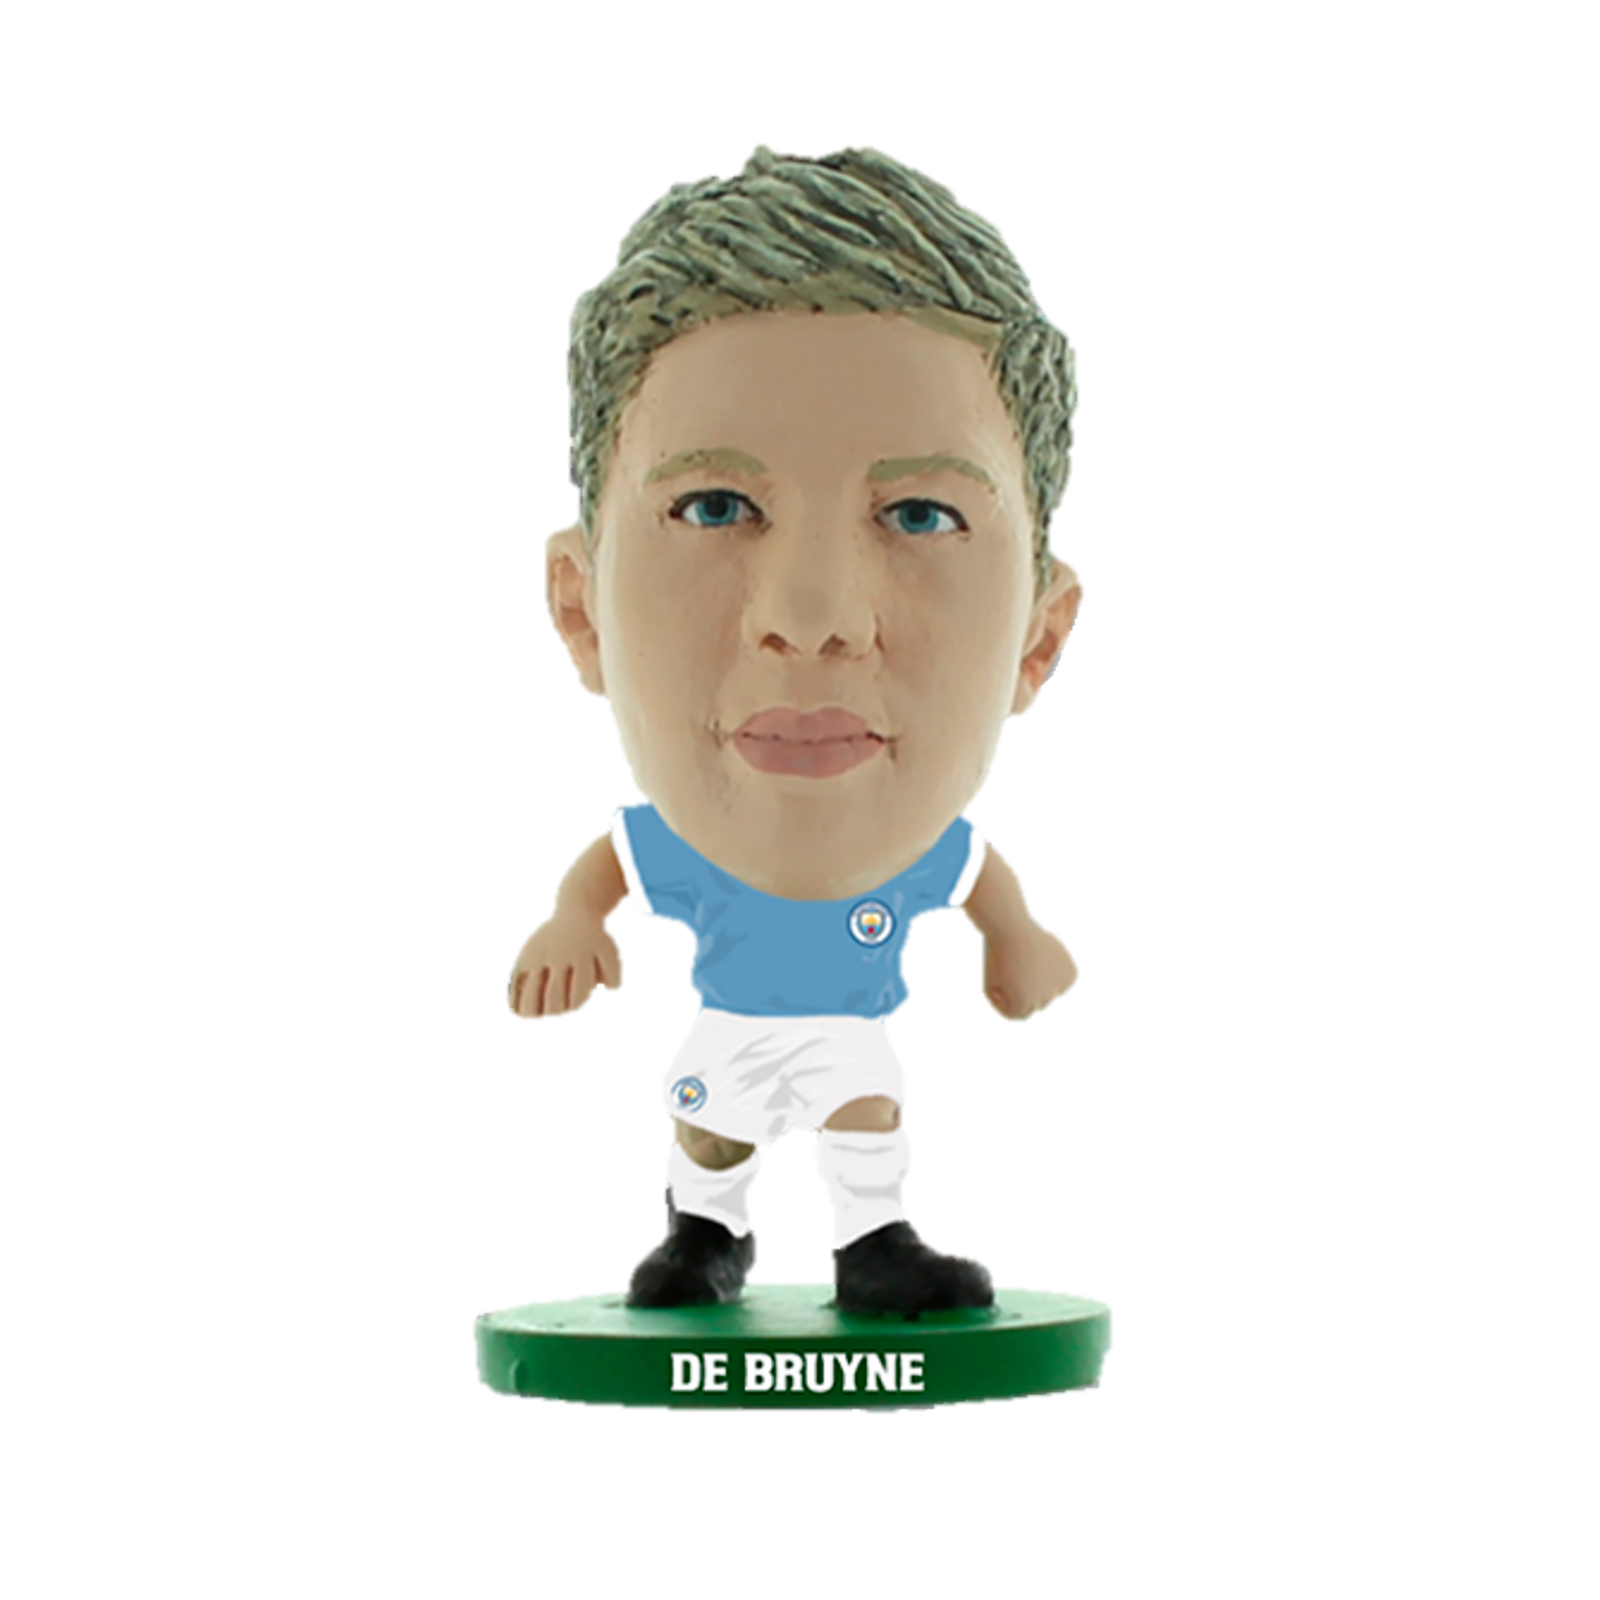 Manchester City SoccerStarz Foden Mini Action Figure